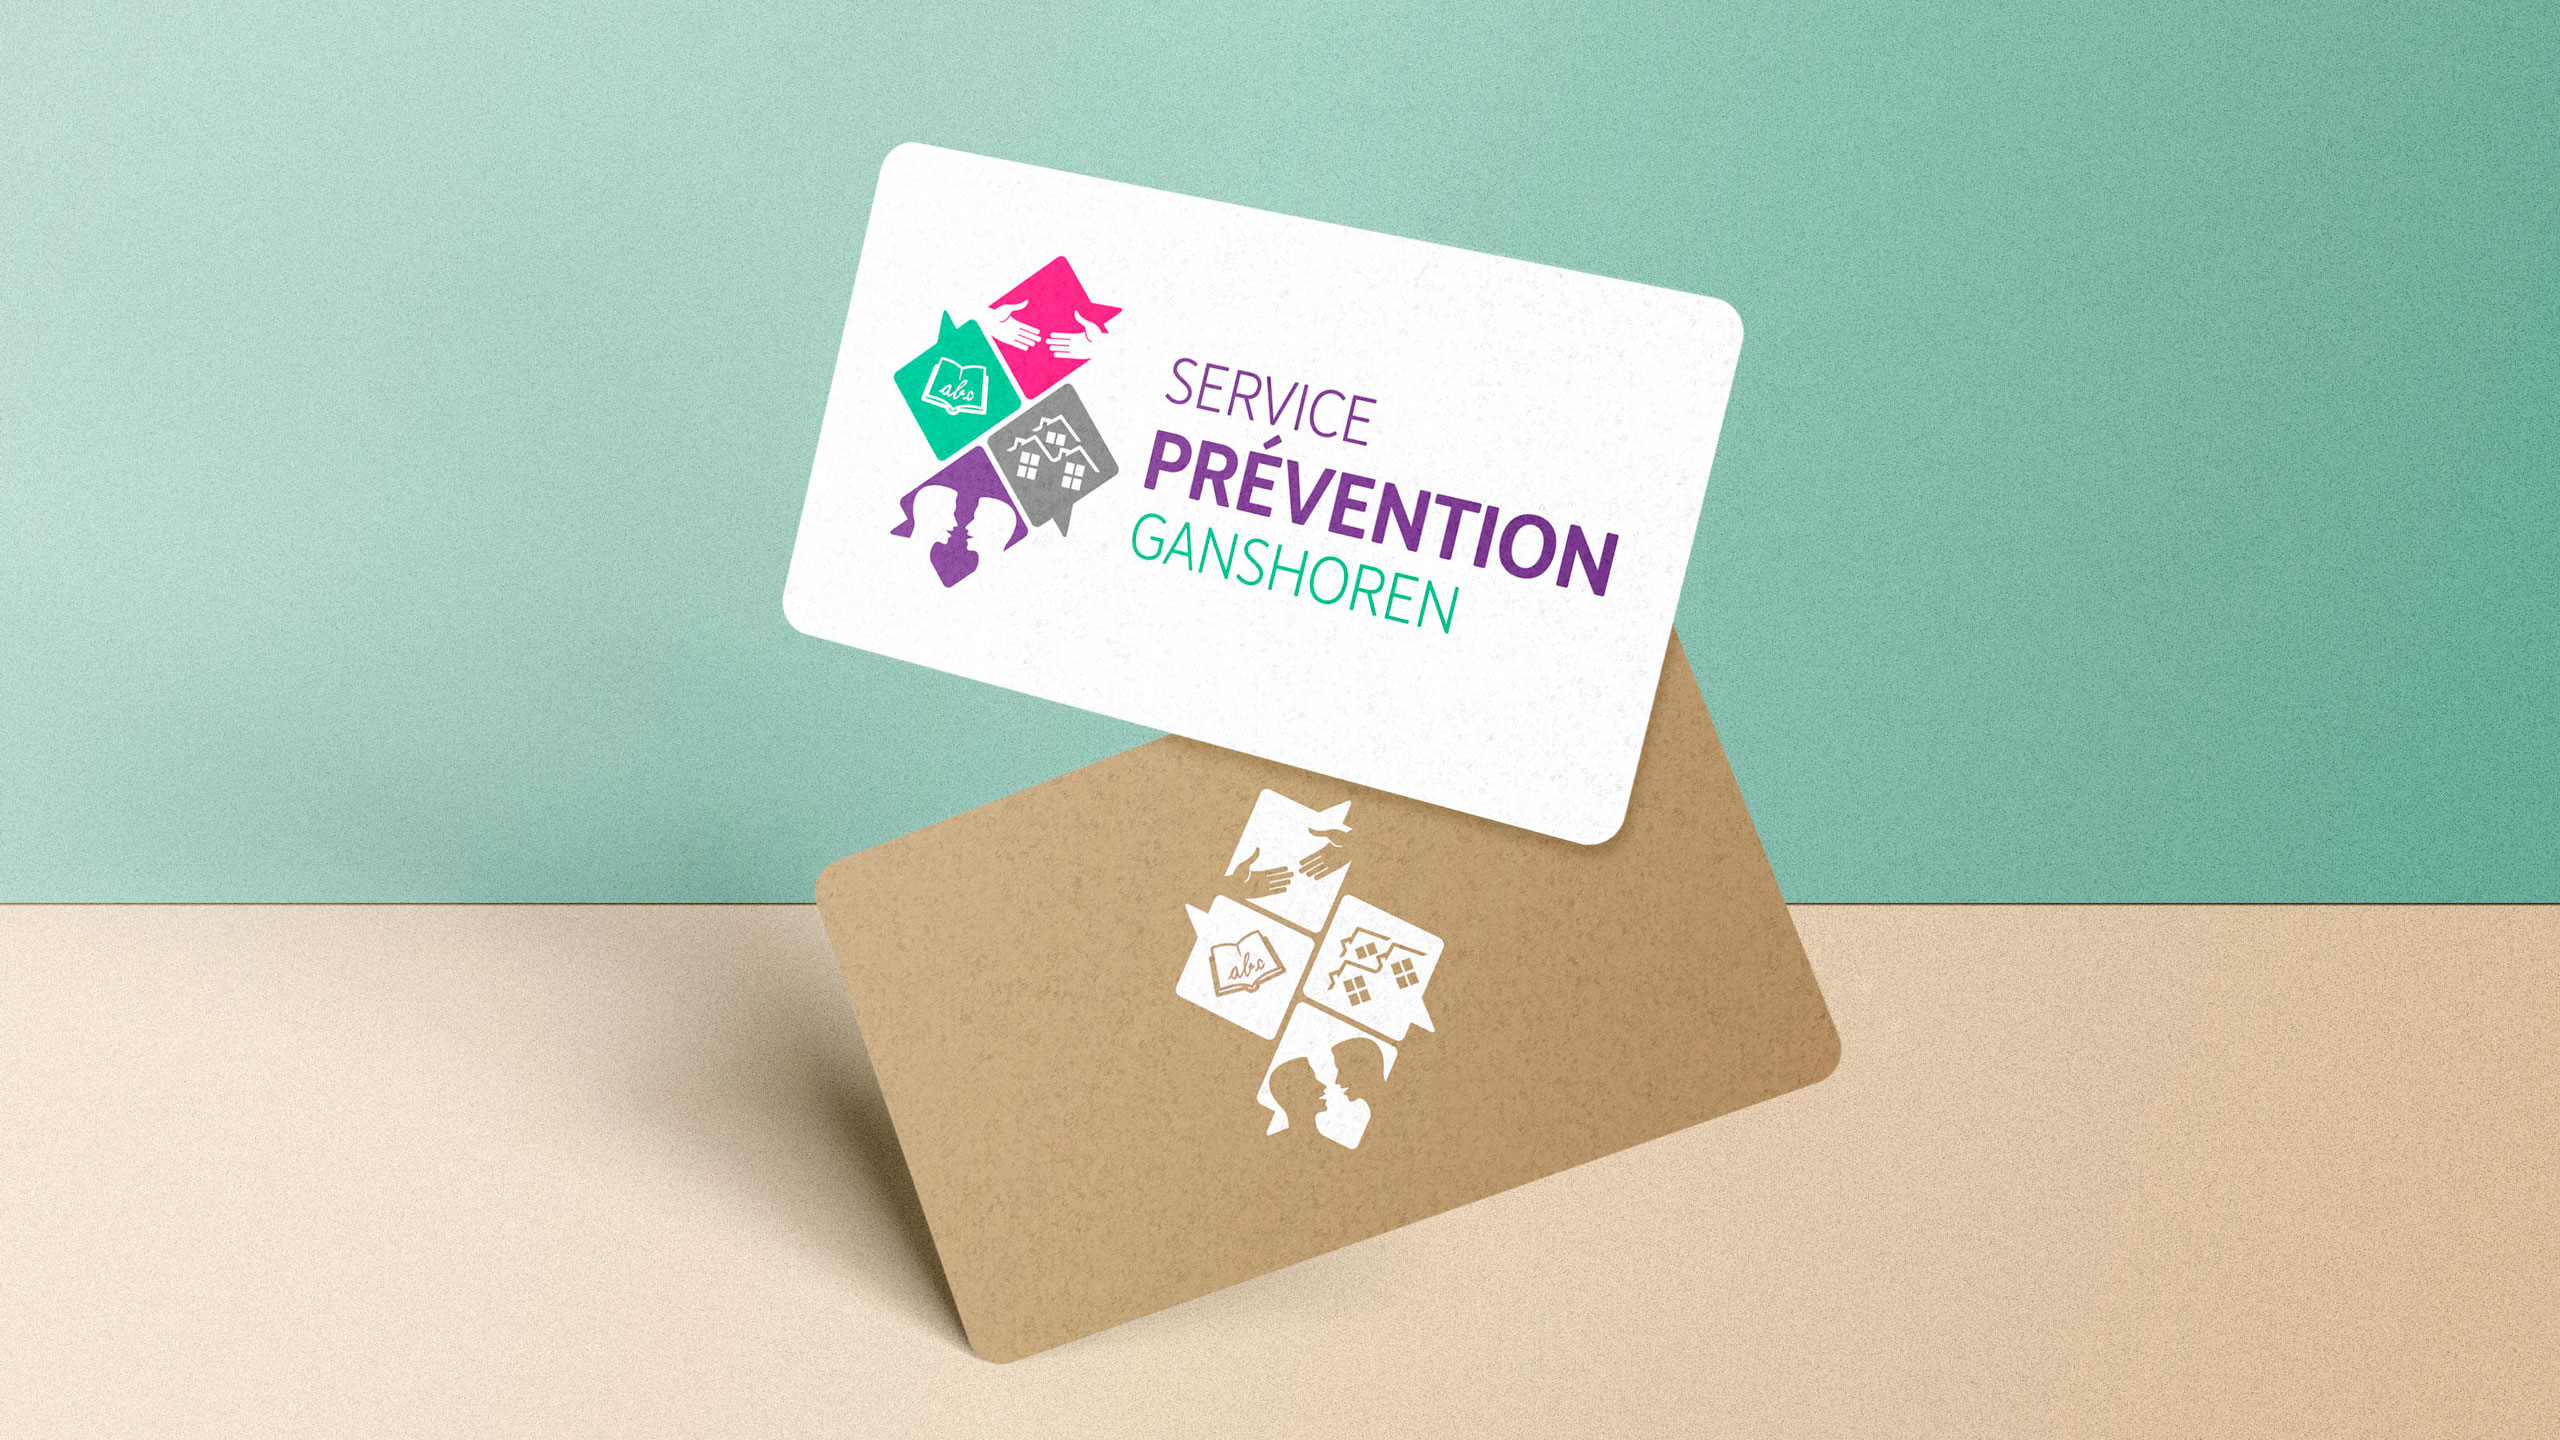 Sercice prevention ganshoren logo-Simpl. SRL is a graphic design studio in Brussels